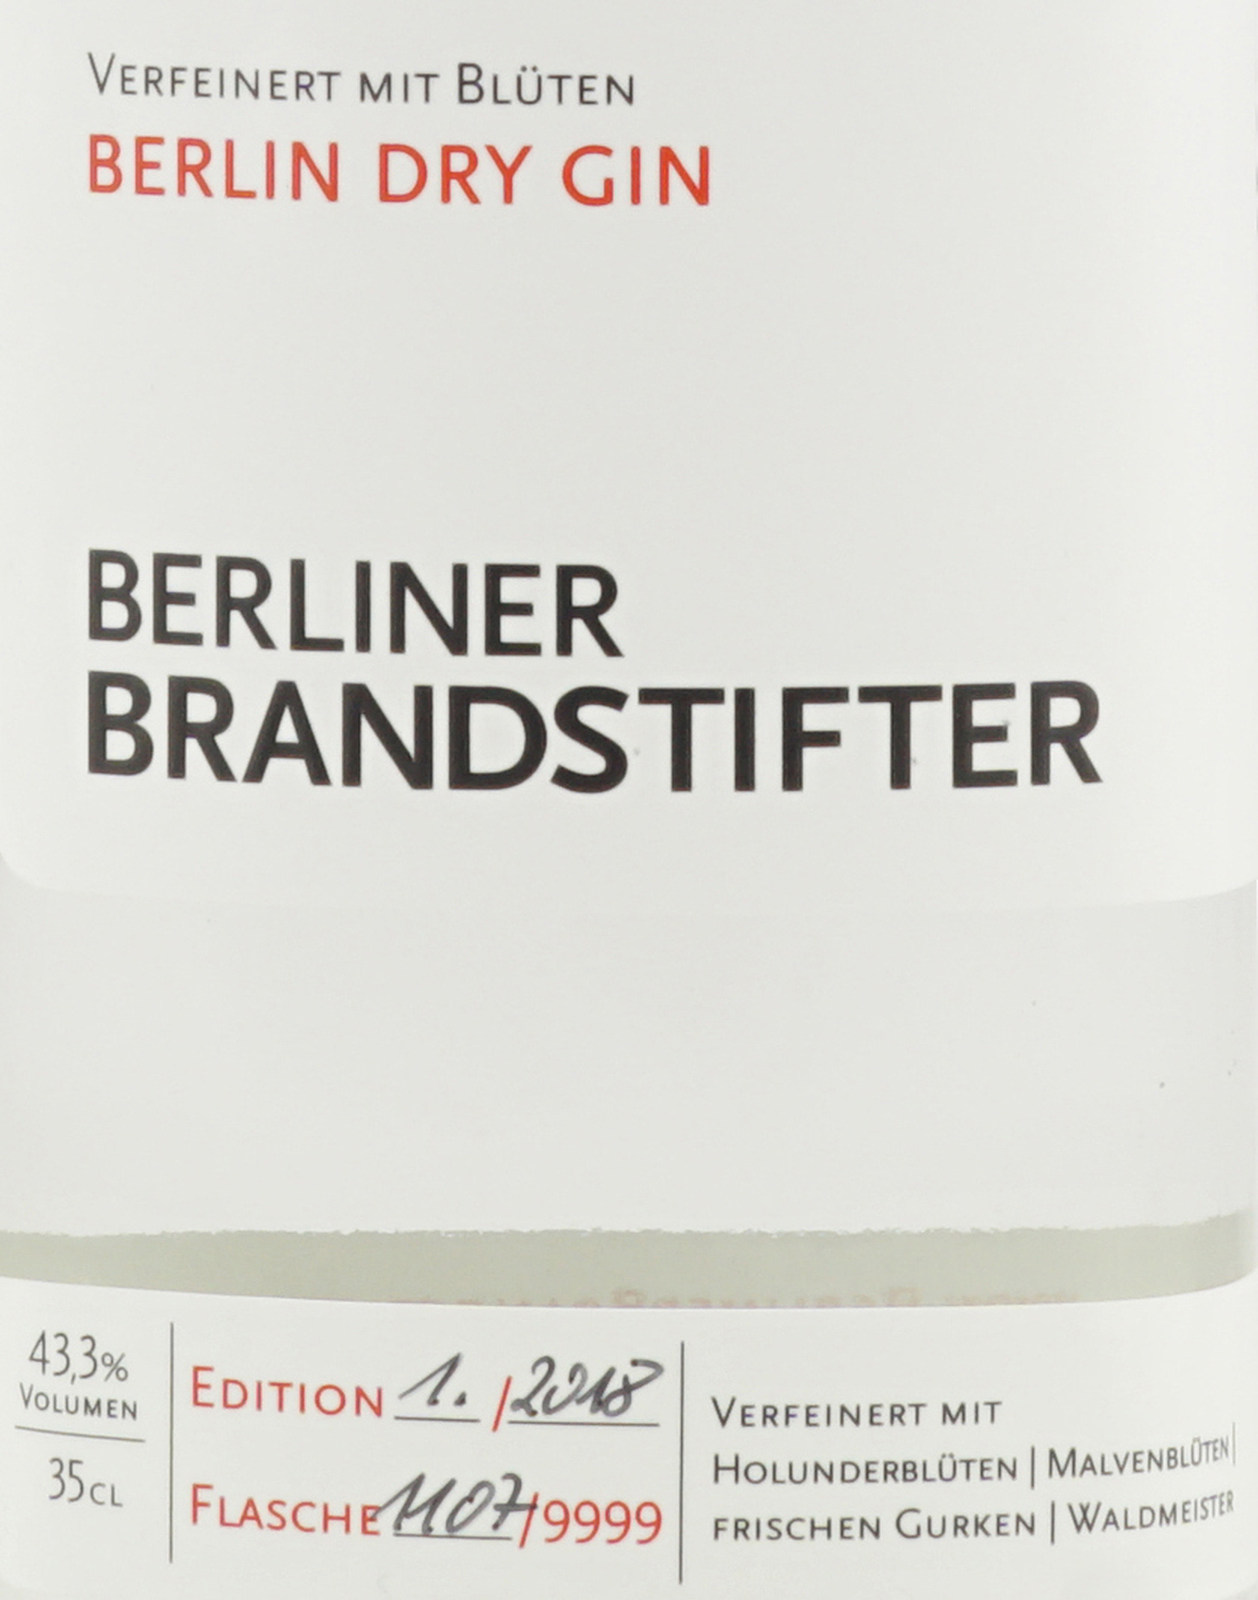 Berliner Brandstifter Berlin Dry Gin 350 ml. und 43,3 %